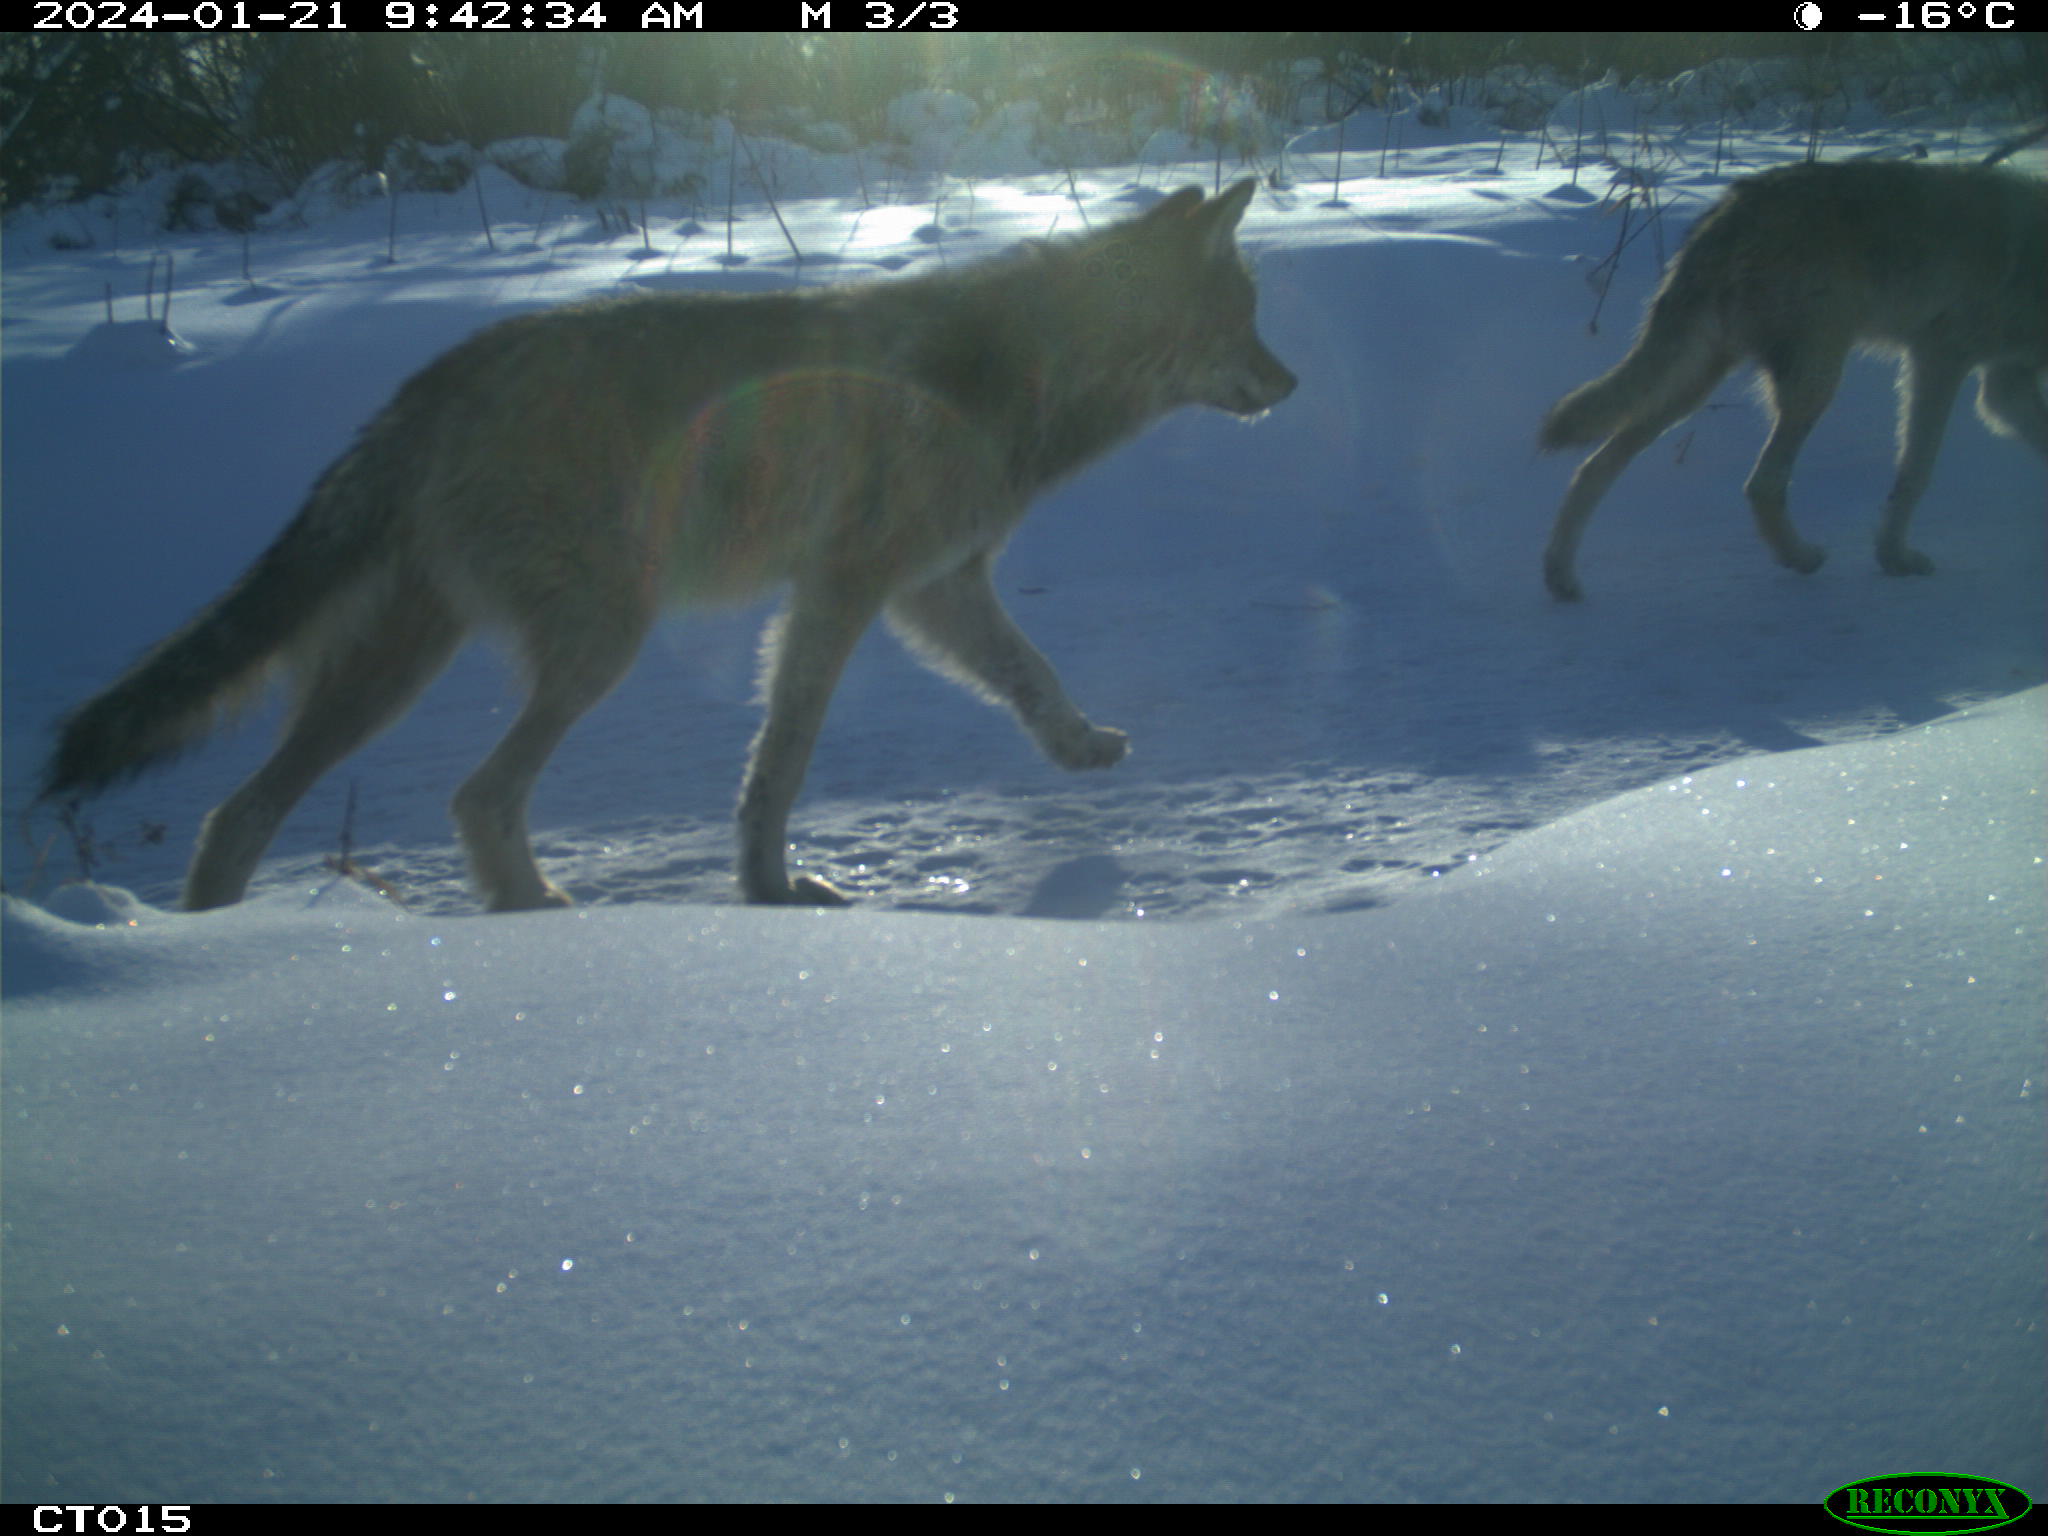 Two wolves walking through snow